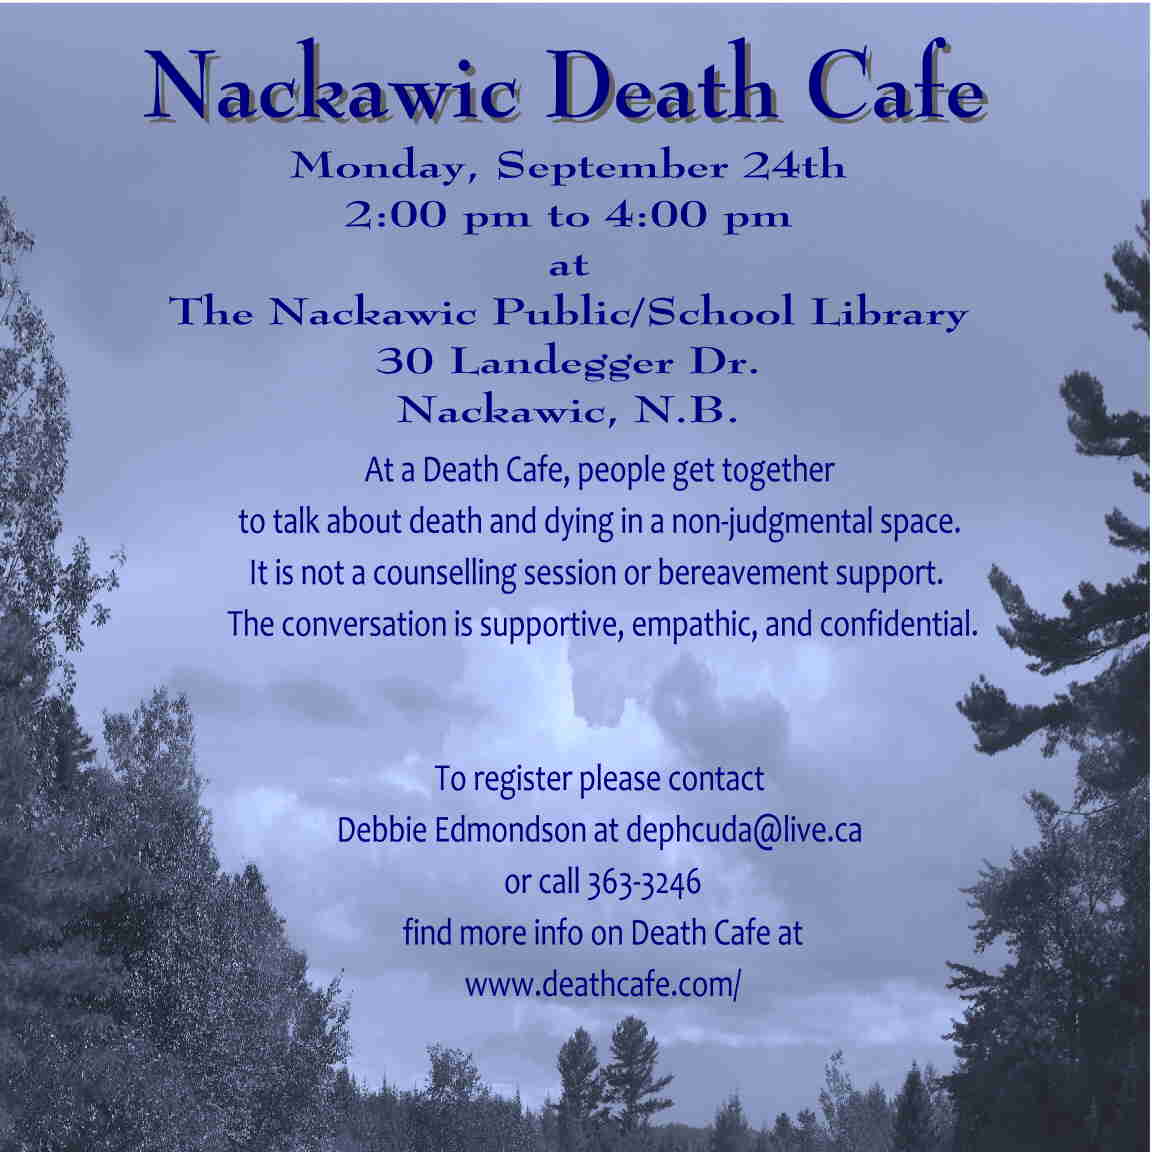 Big Axe Death Cafe Nackawic